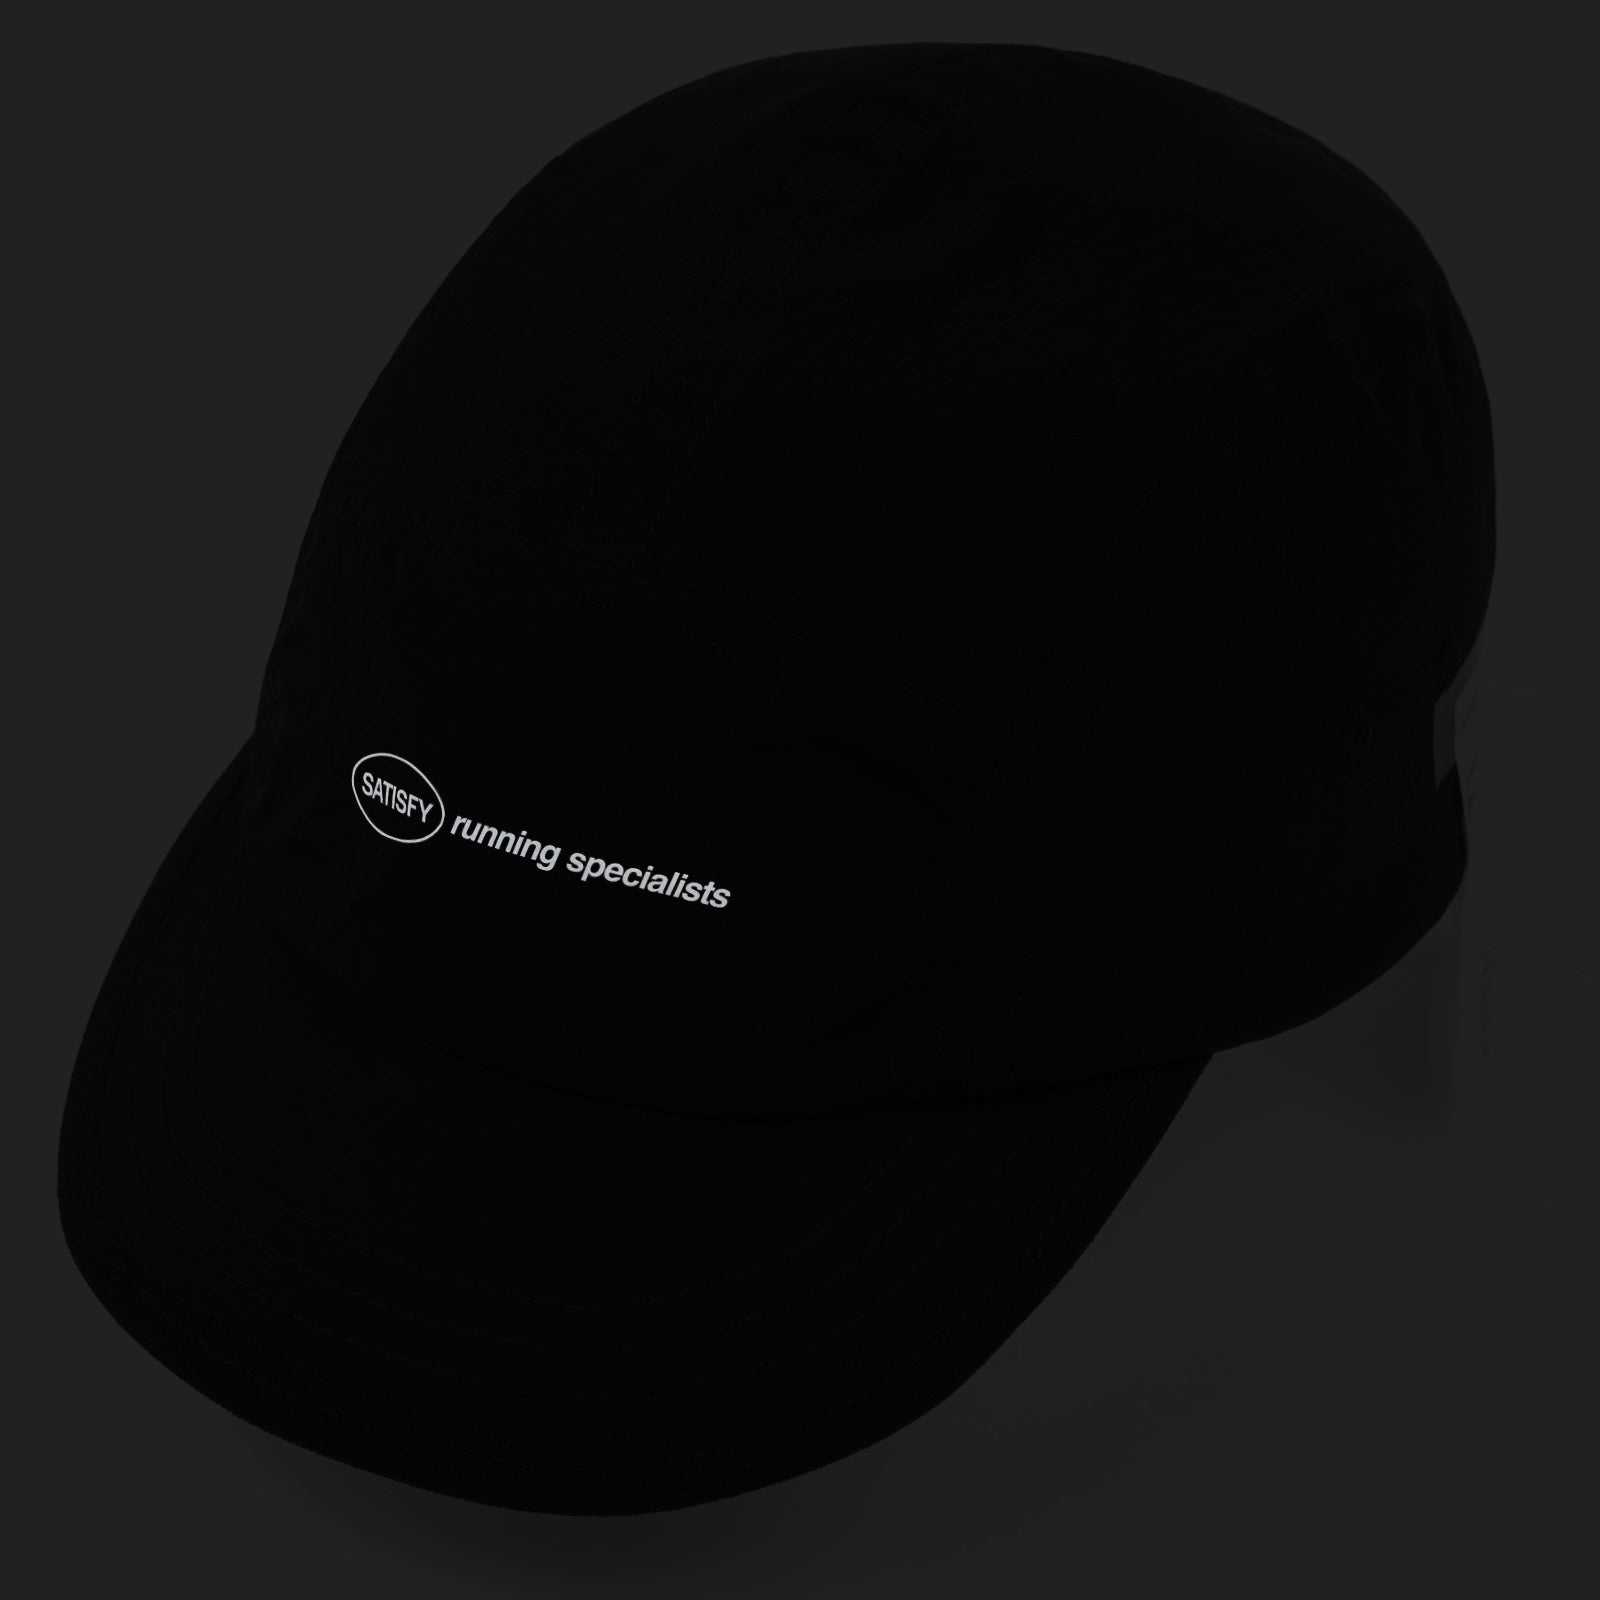 Satisfy - PeaceShell™ Trail Cap (Black)